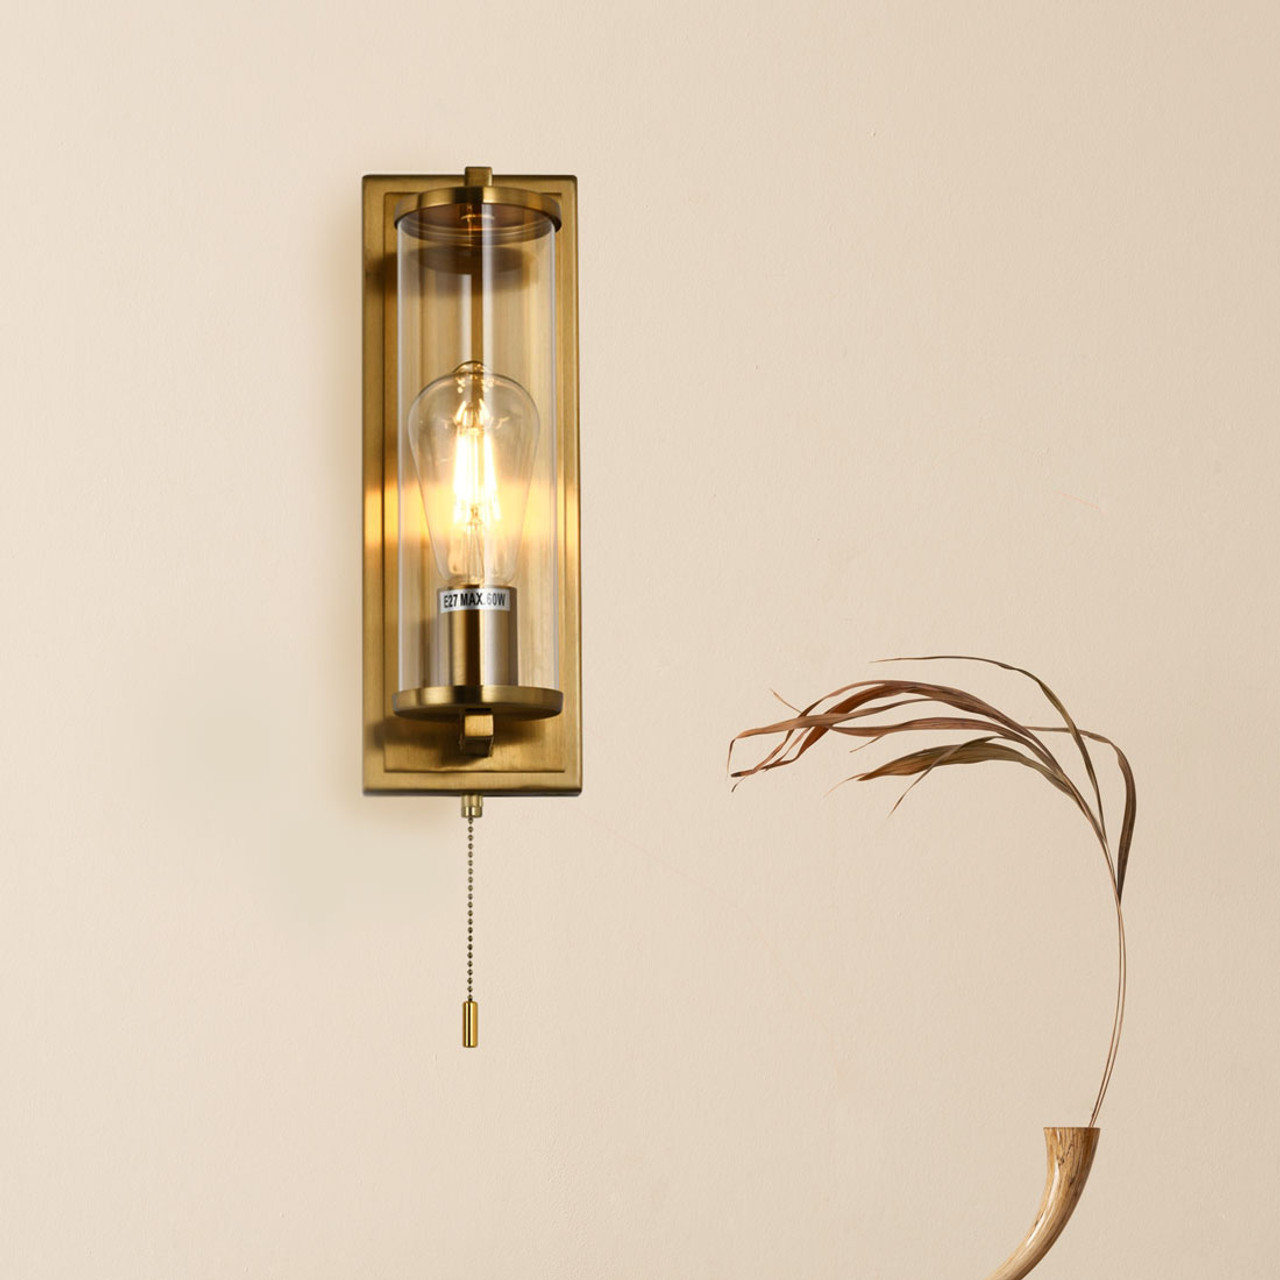 Pull Cord Cylindrical Bathroom Wall Light in Brushed Brass. Bathroom Lighting Ideas.